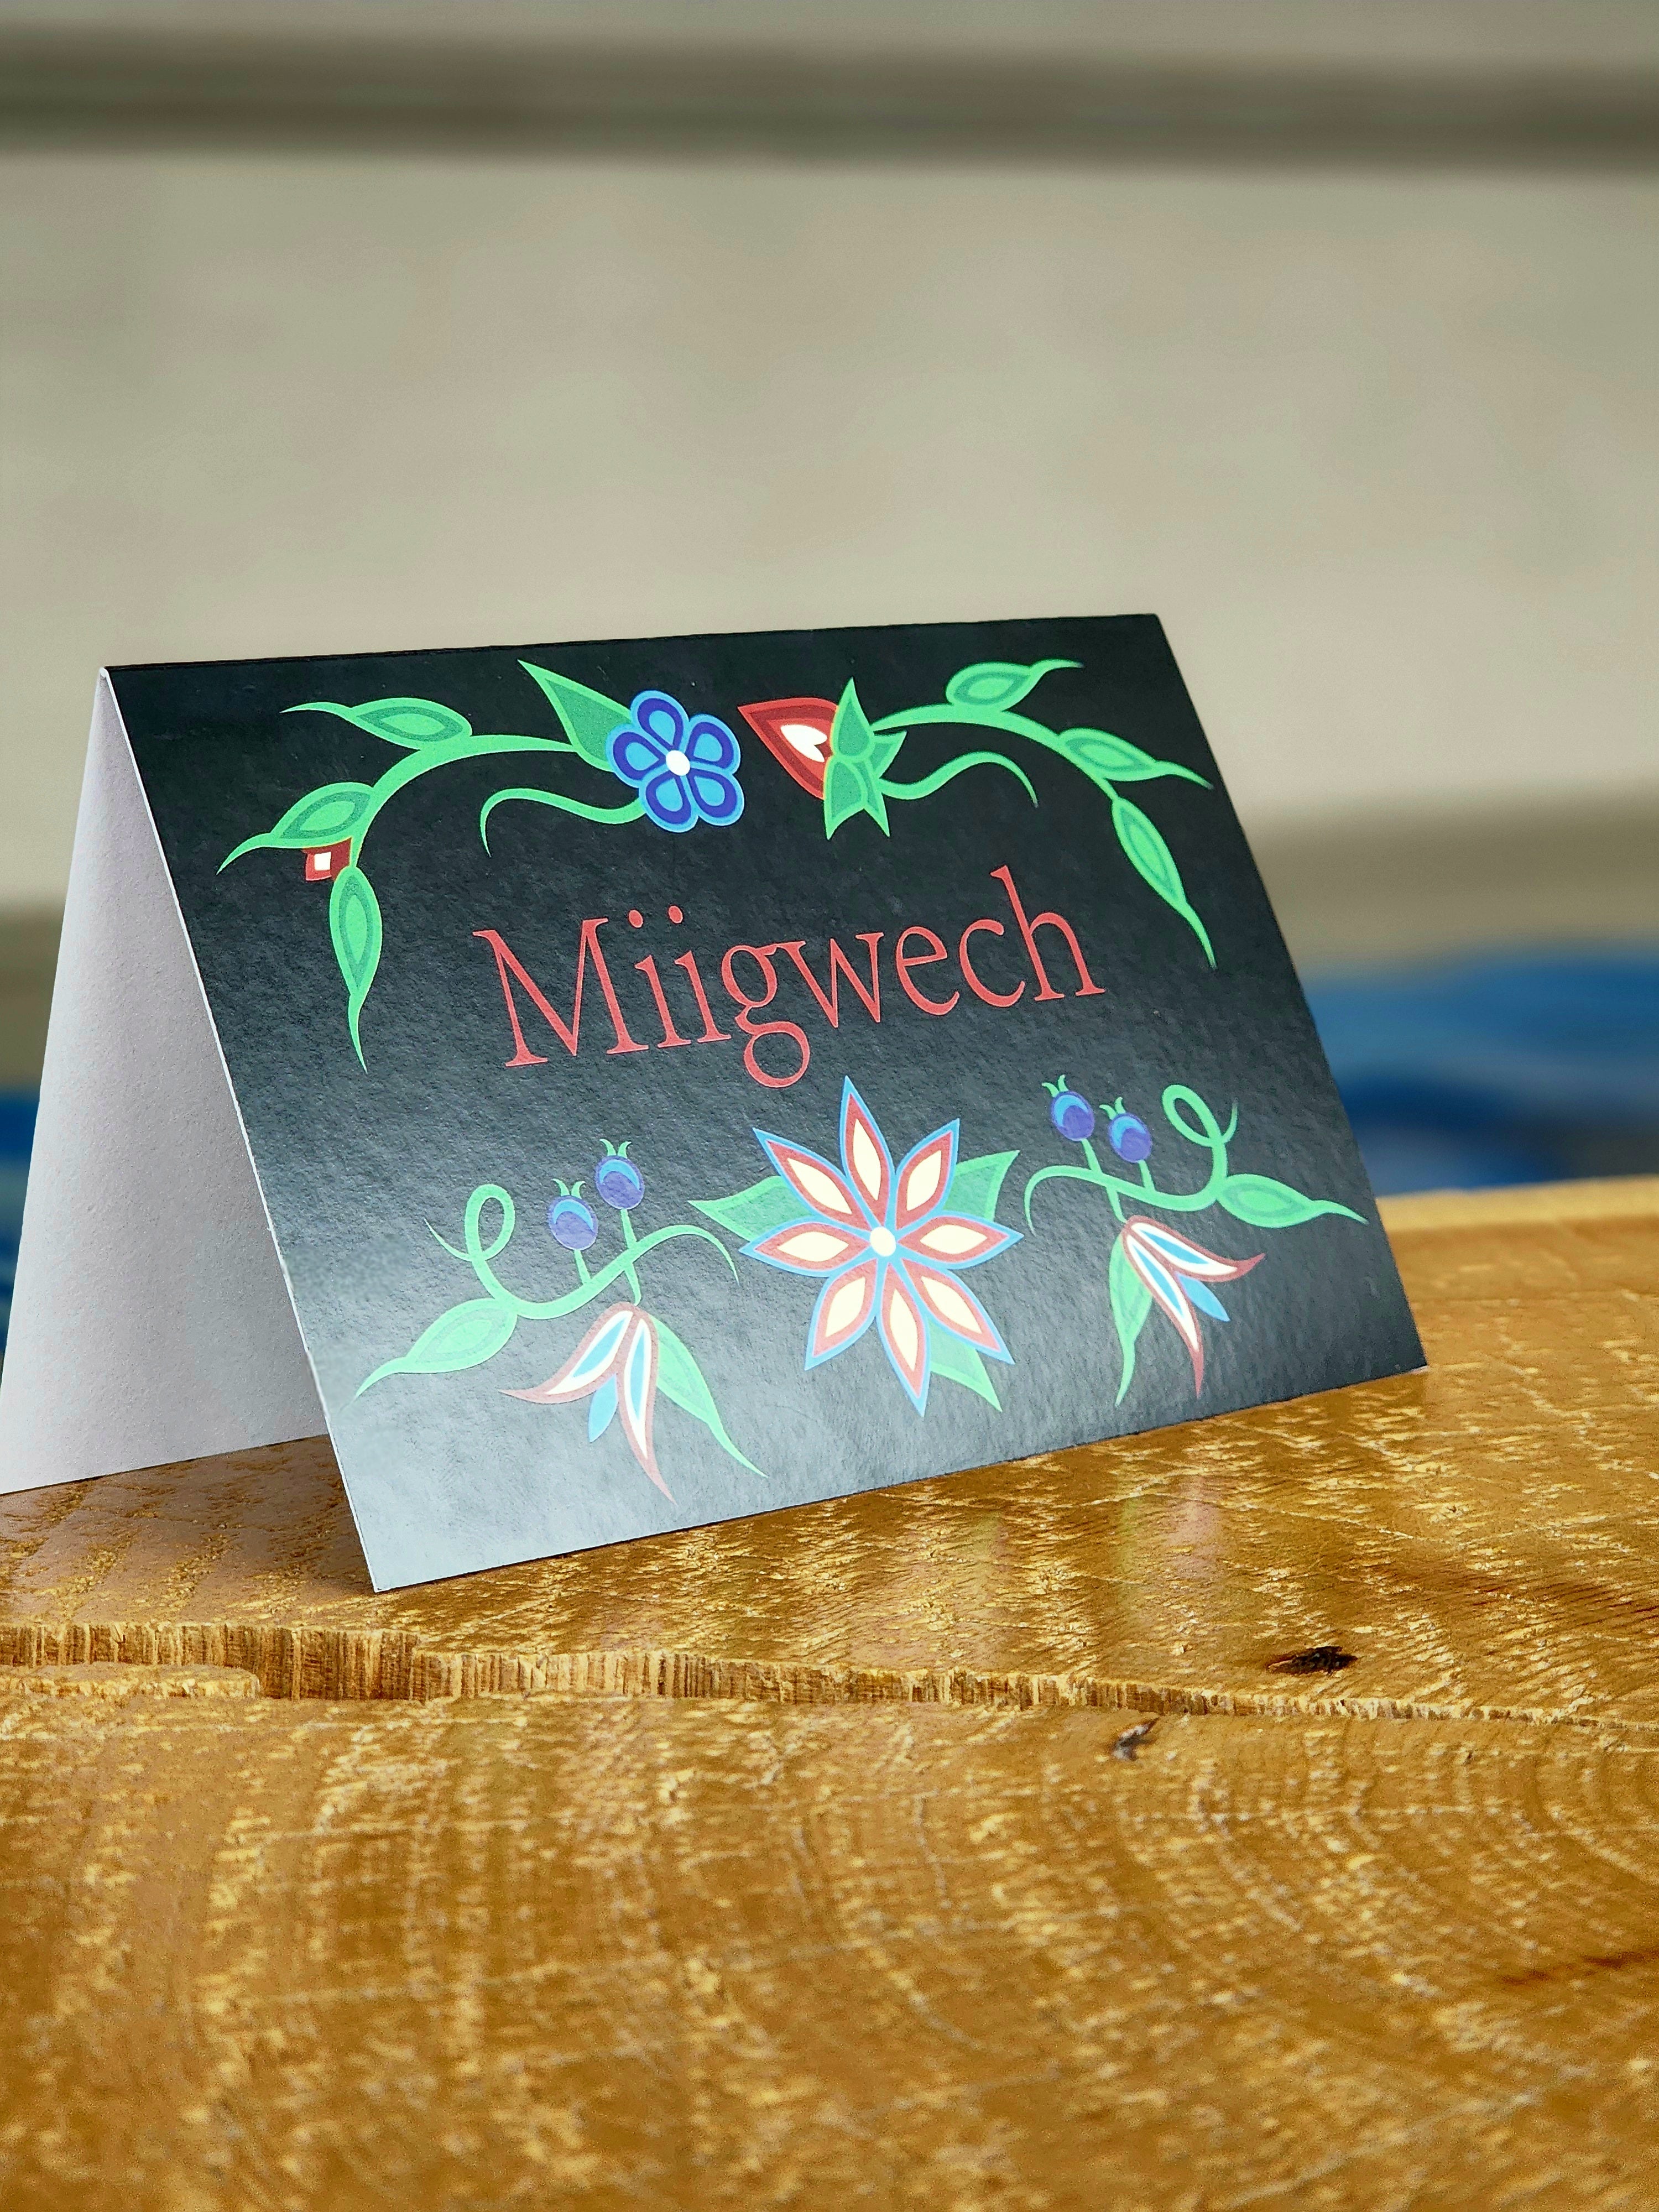 Miigwech (Thank You) Cards